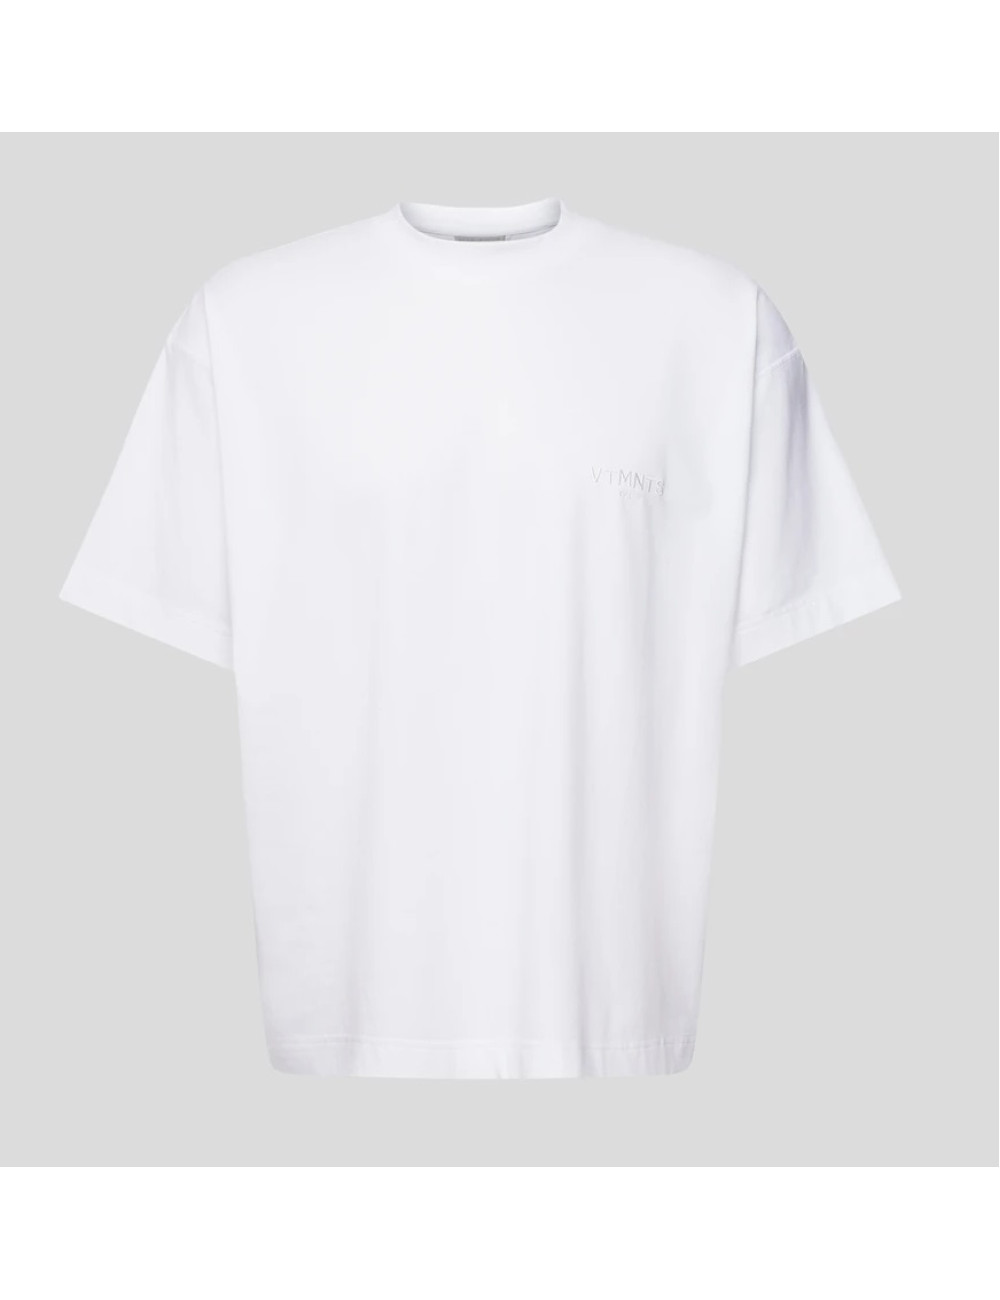 Men's 'VTMNTS' Embroidered Logo T-Shirt